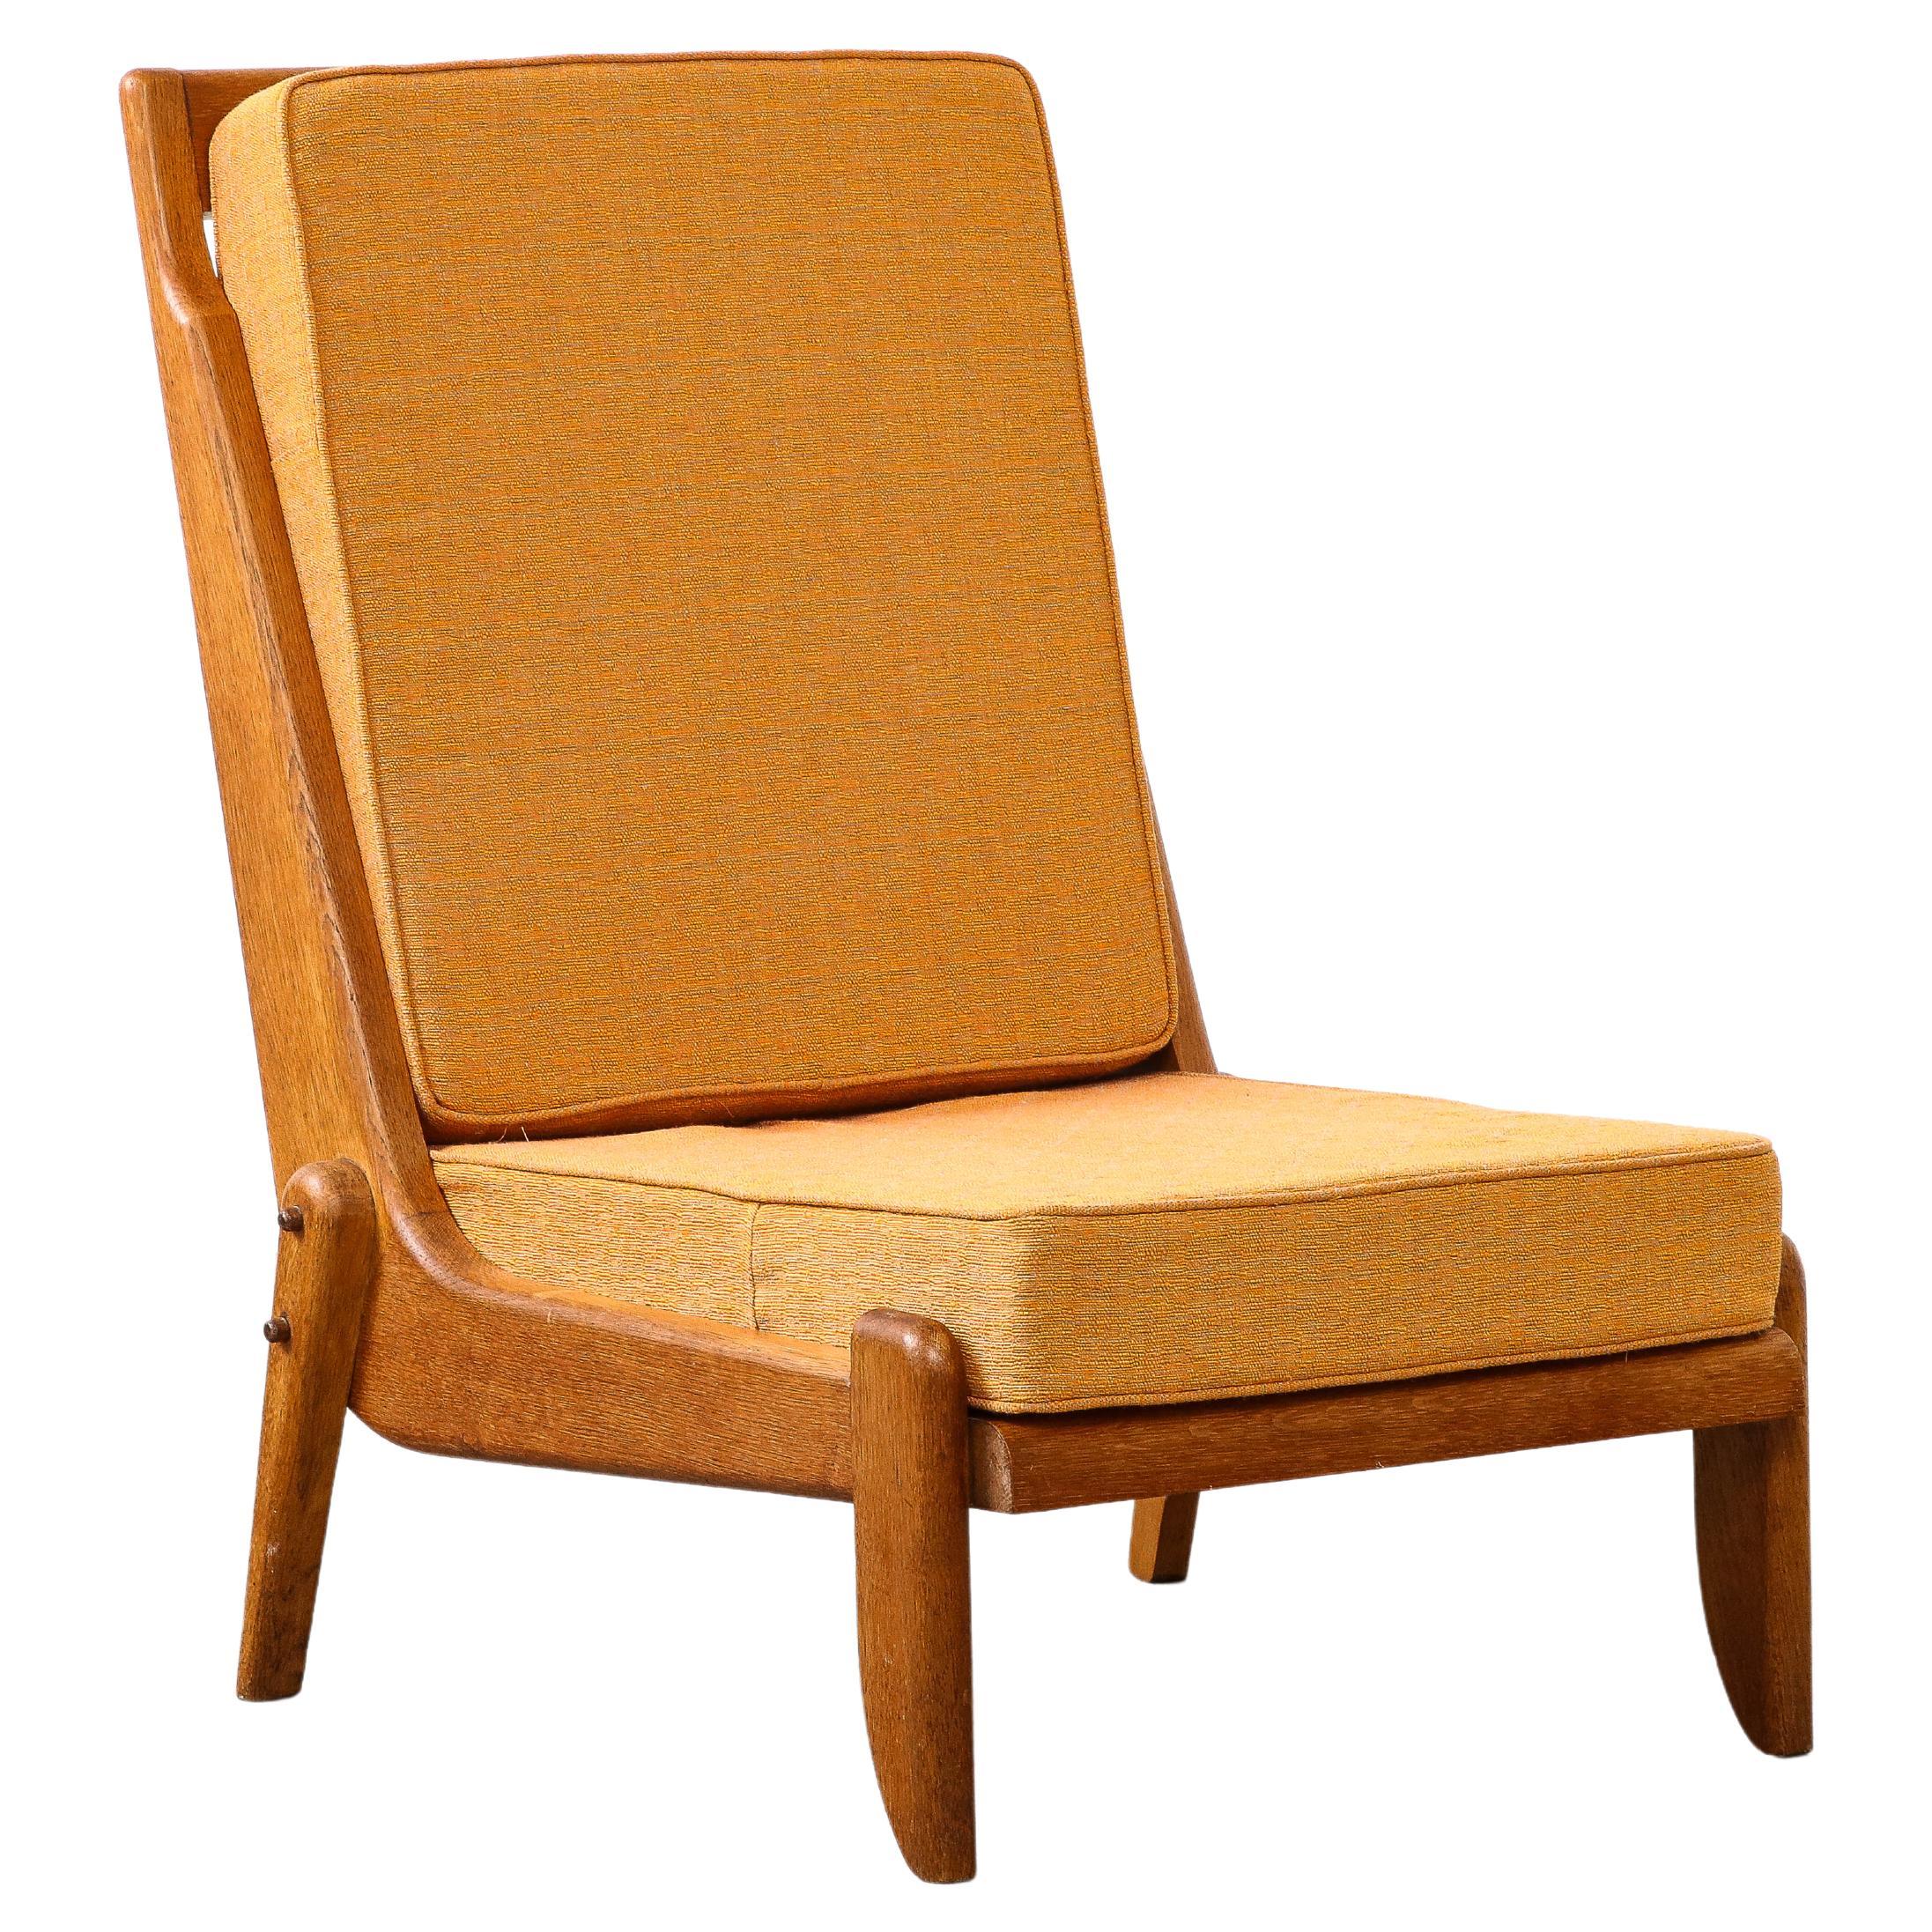 Guillerme et Chambron Oak Lounge Chair with Sculptural Legs, France, c. 1960 For Sale